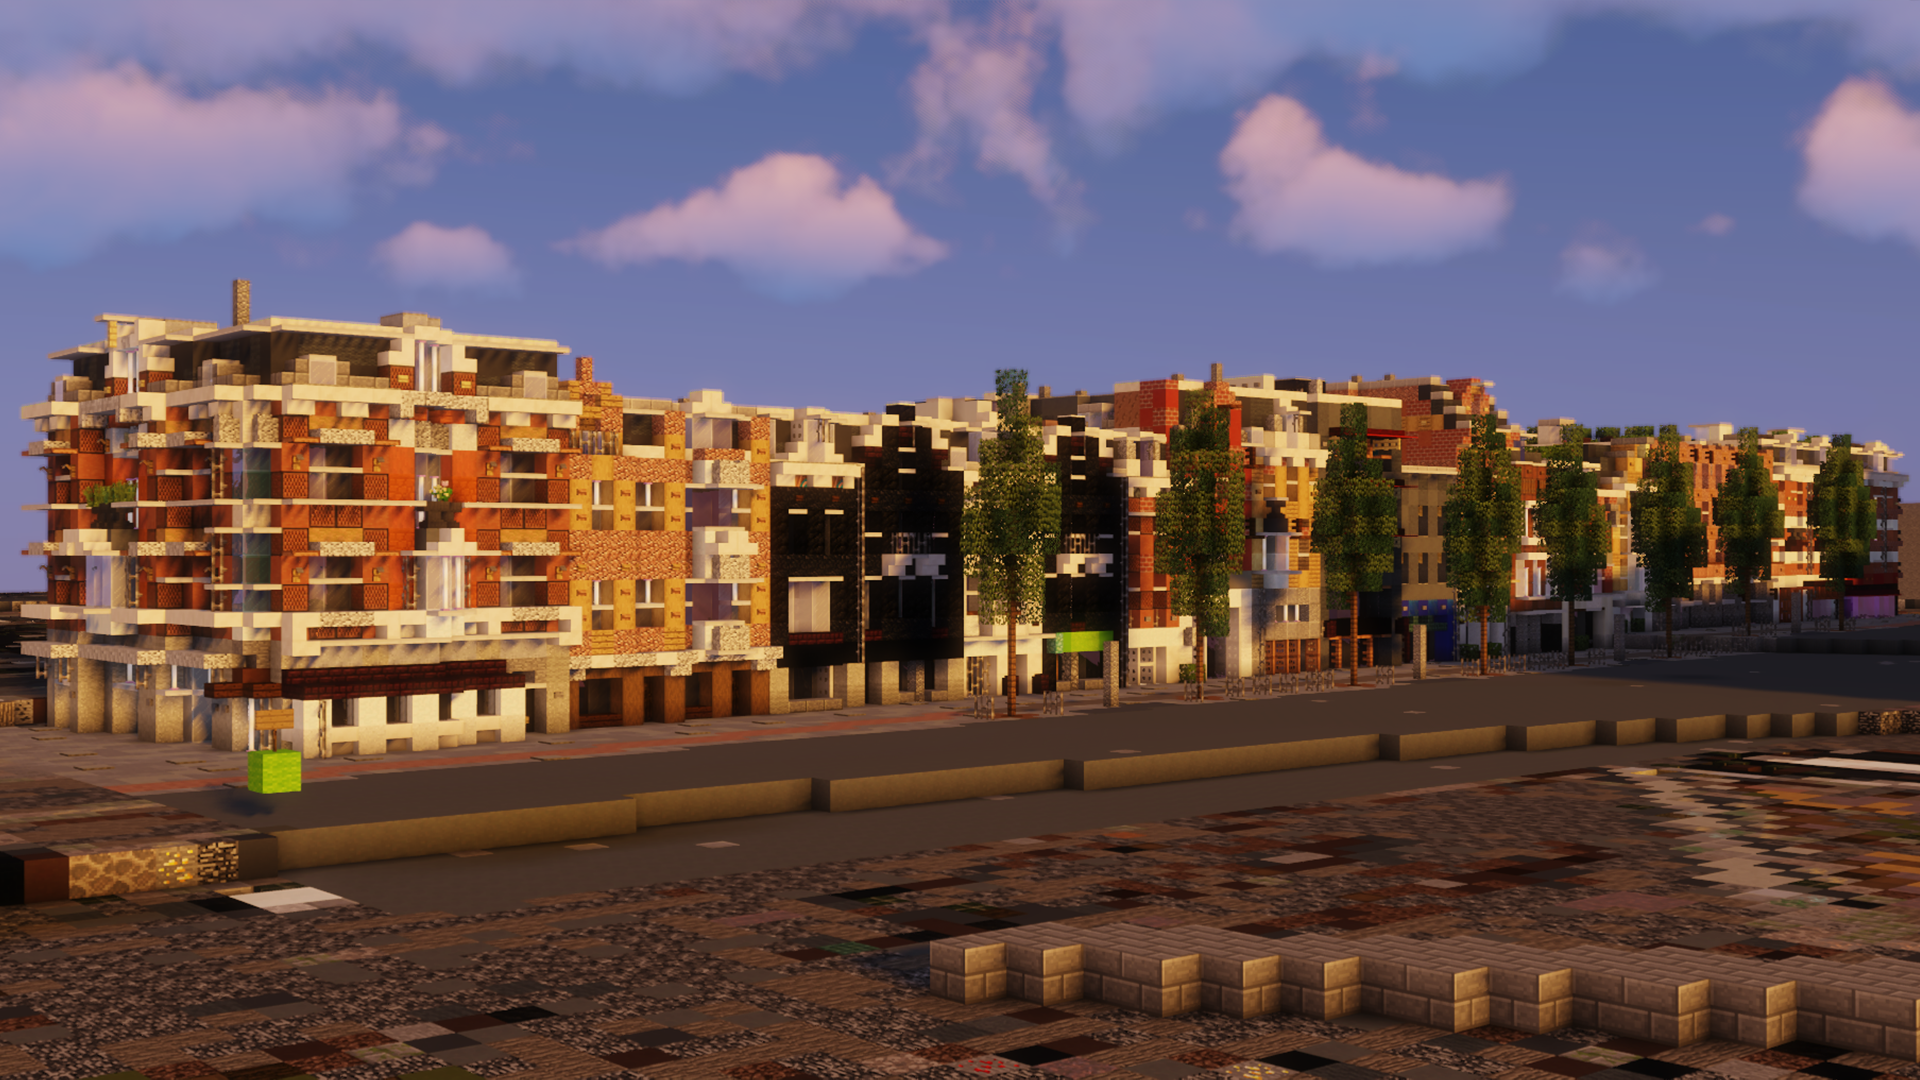 Google 3d Earth. Amsterdam, The - Minecraft Worldeditor